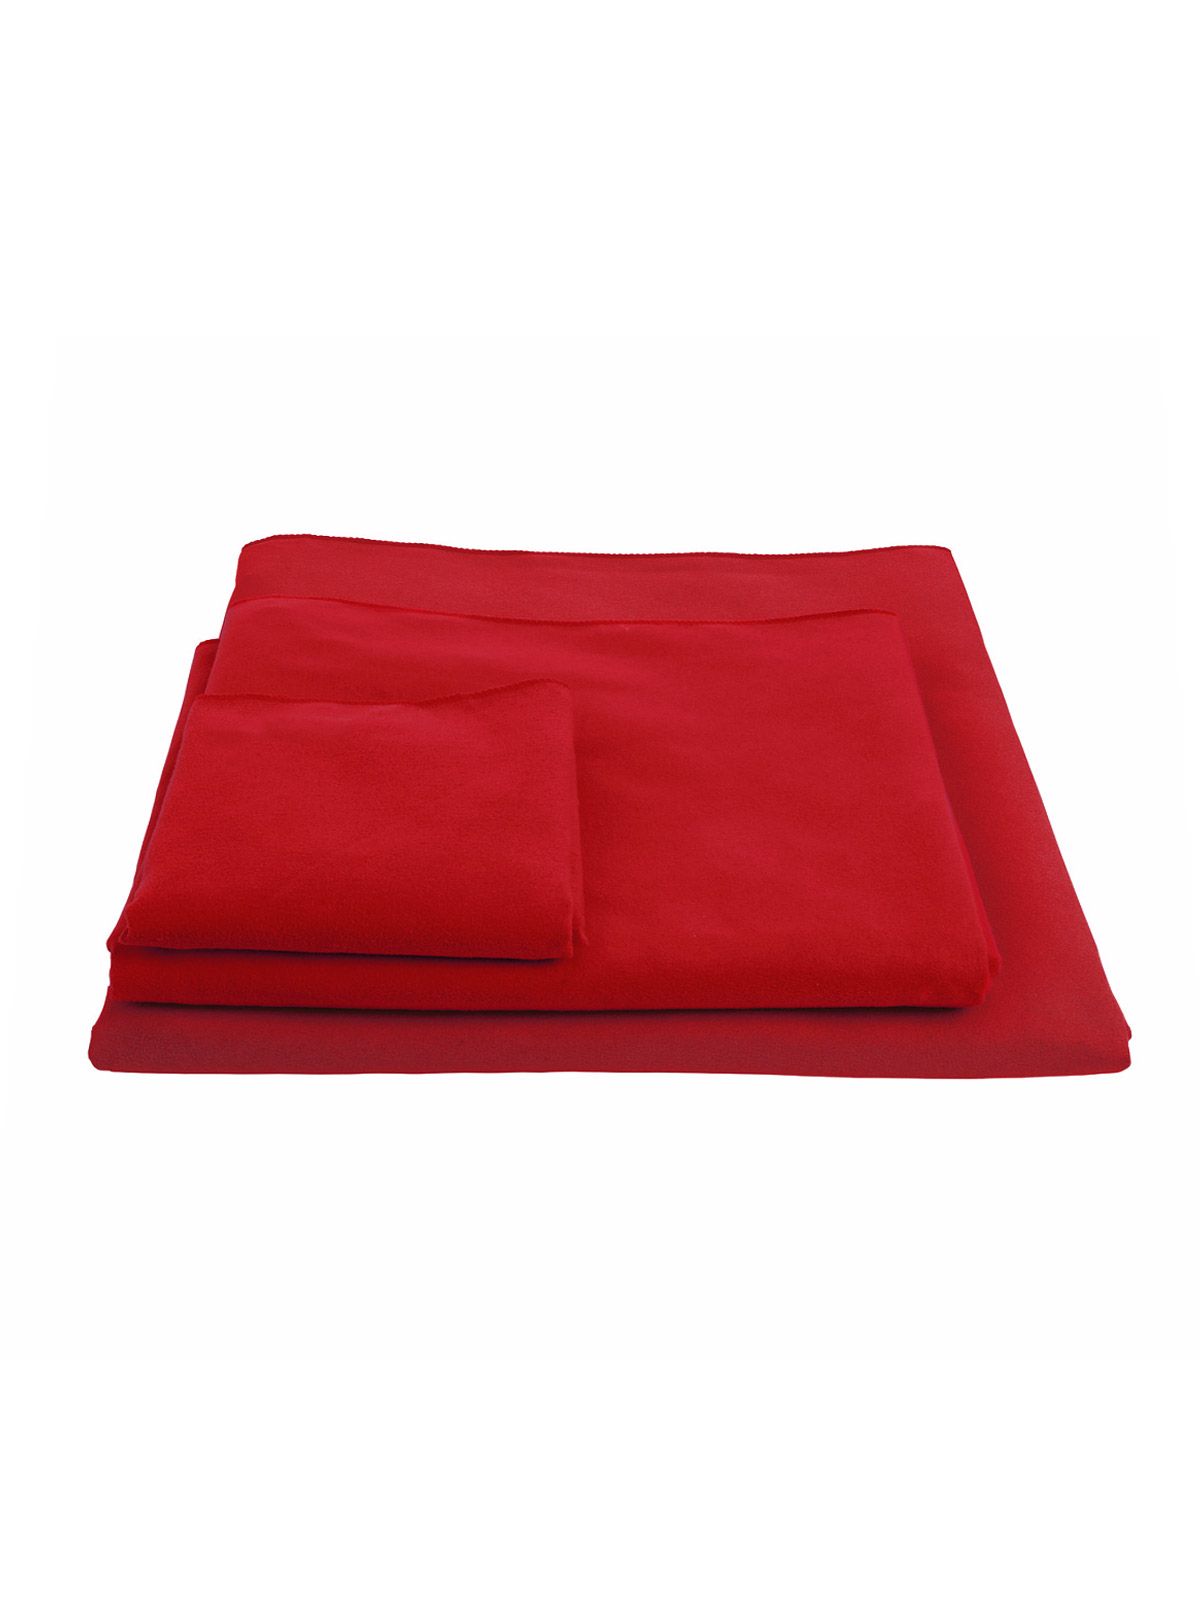 promo-towel-90x170-red.webp